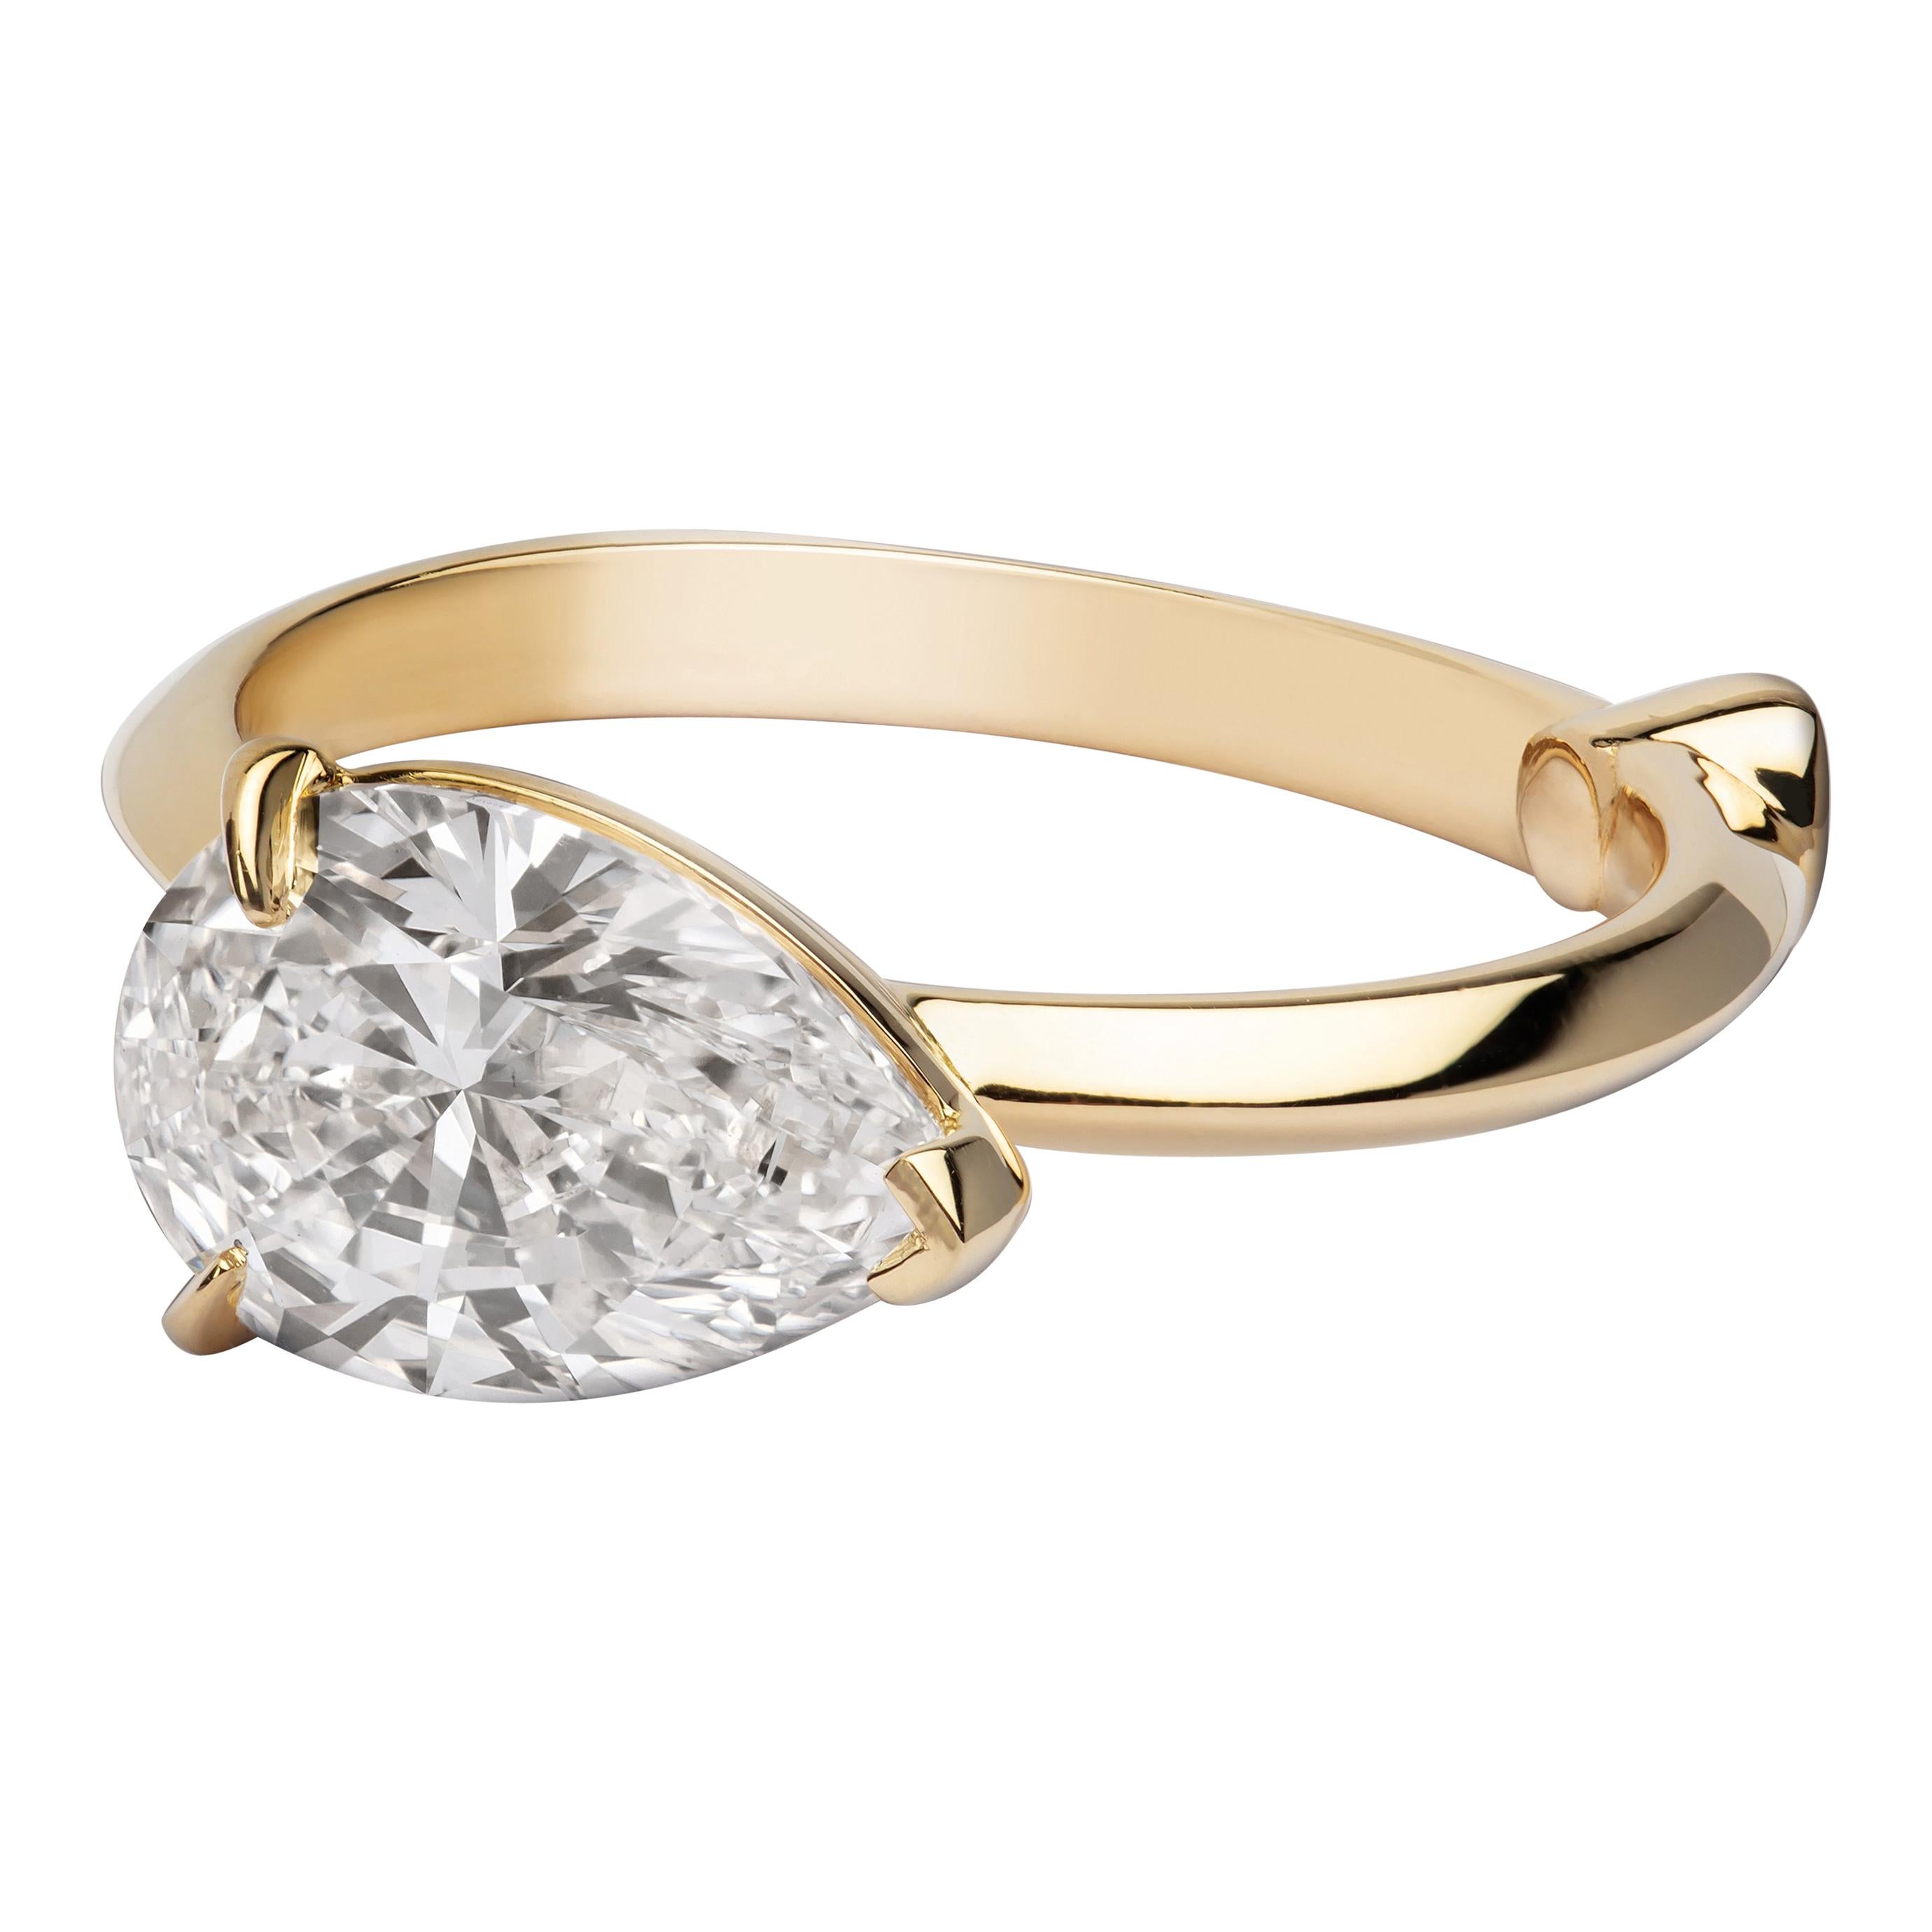 GCAL Certified 18 Karat Yellow Gold and 2.01 Carat Diamond Doris Ring by Alessa For Sale